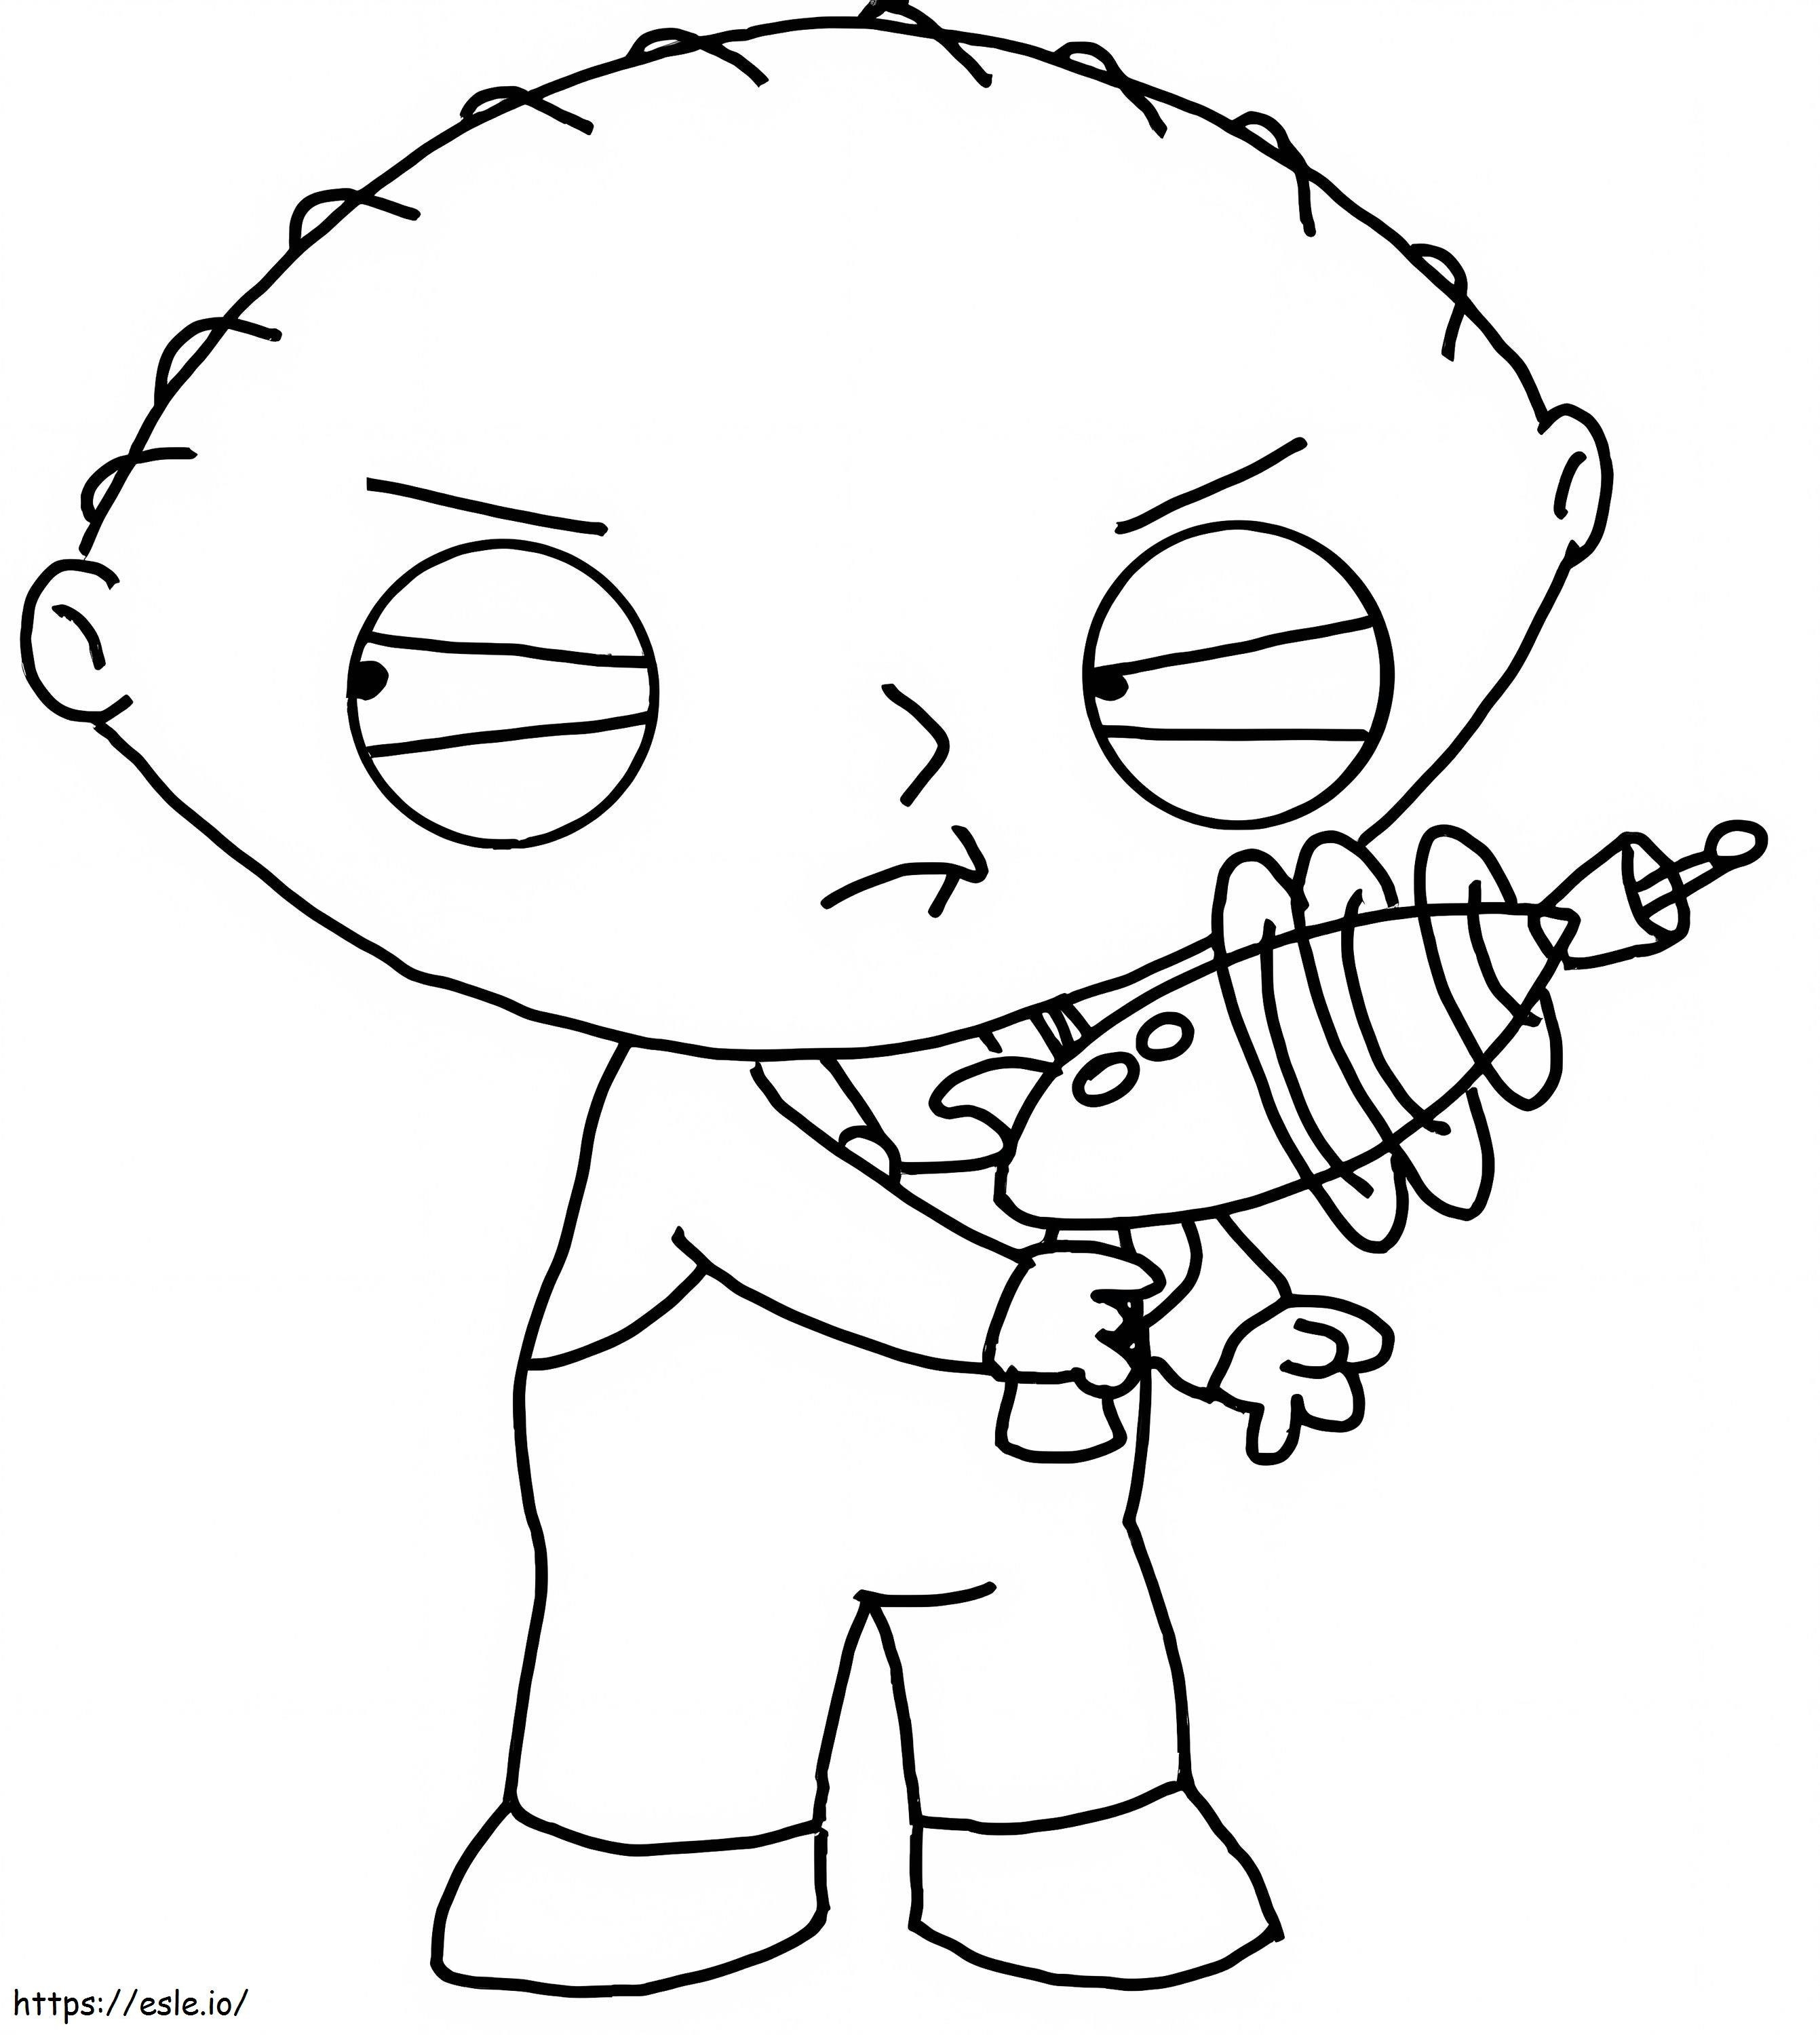 Stewie Griffin Con Arma boyama